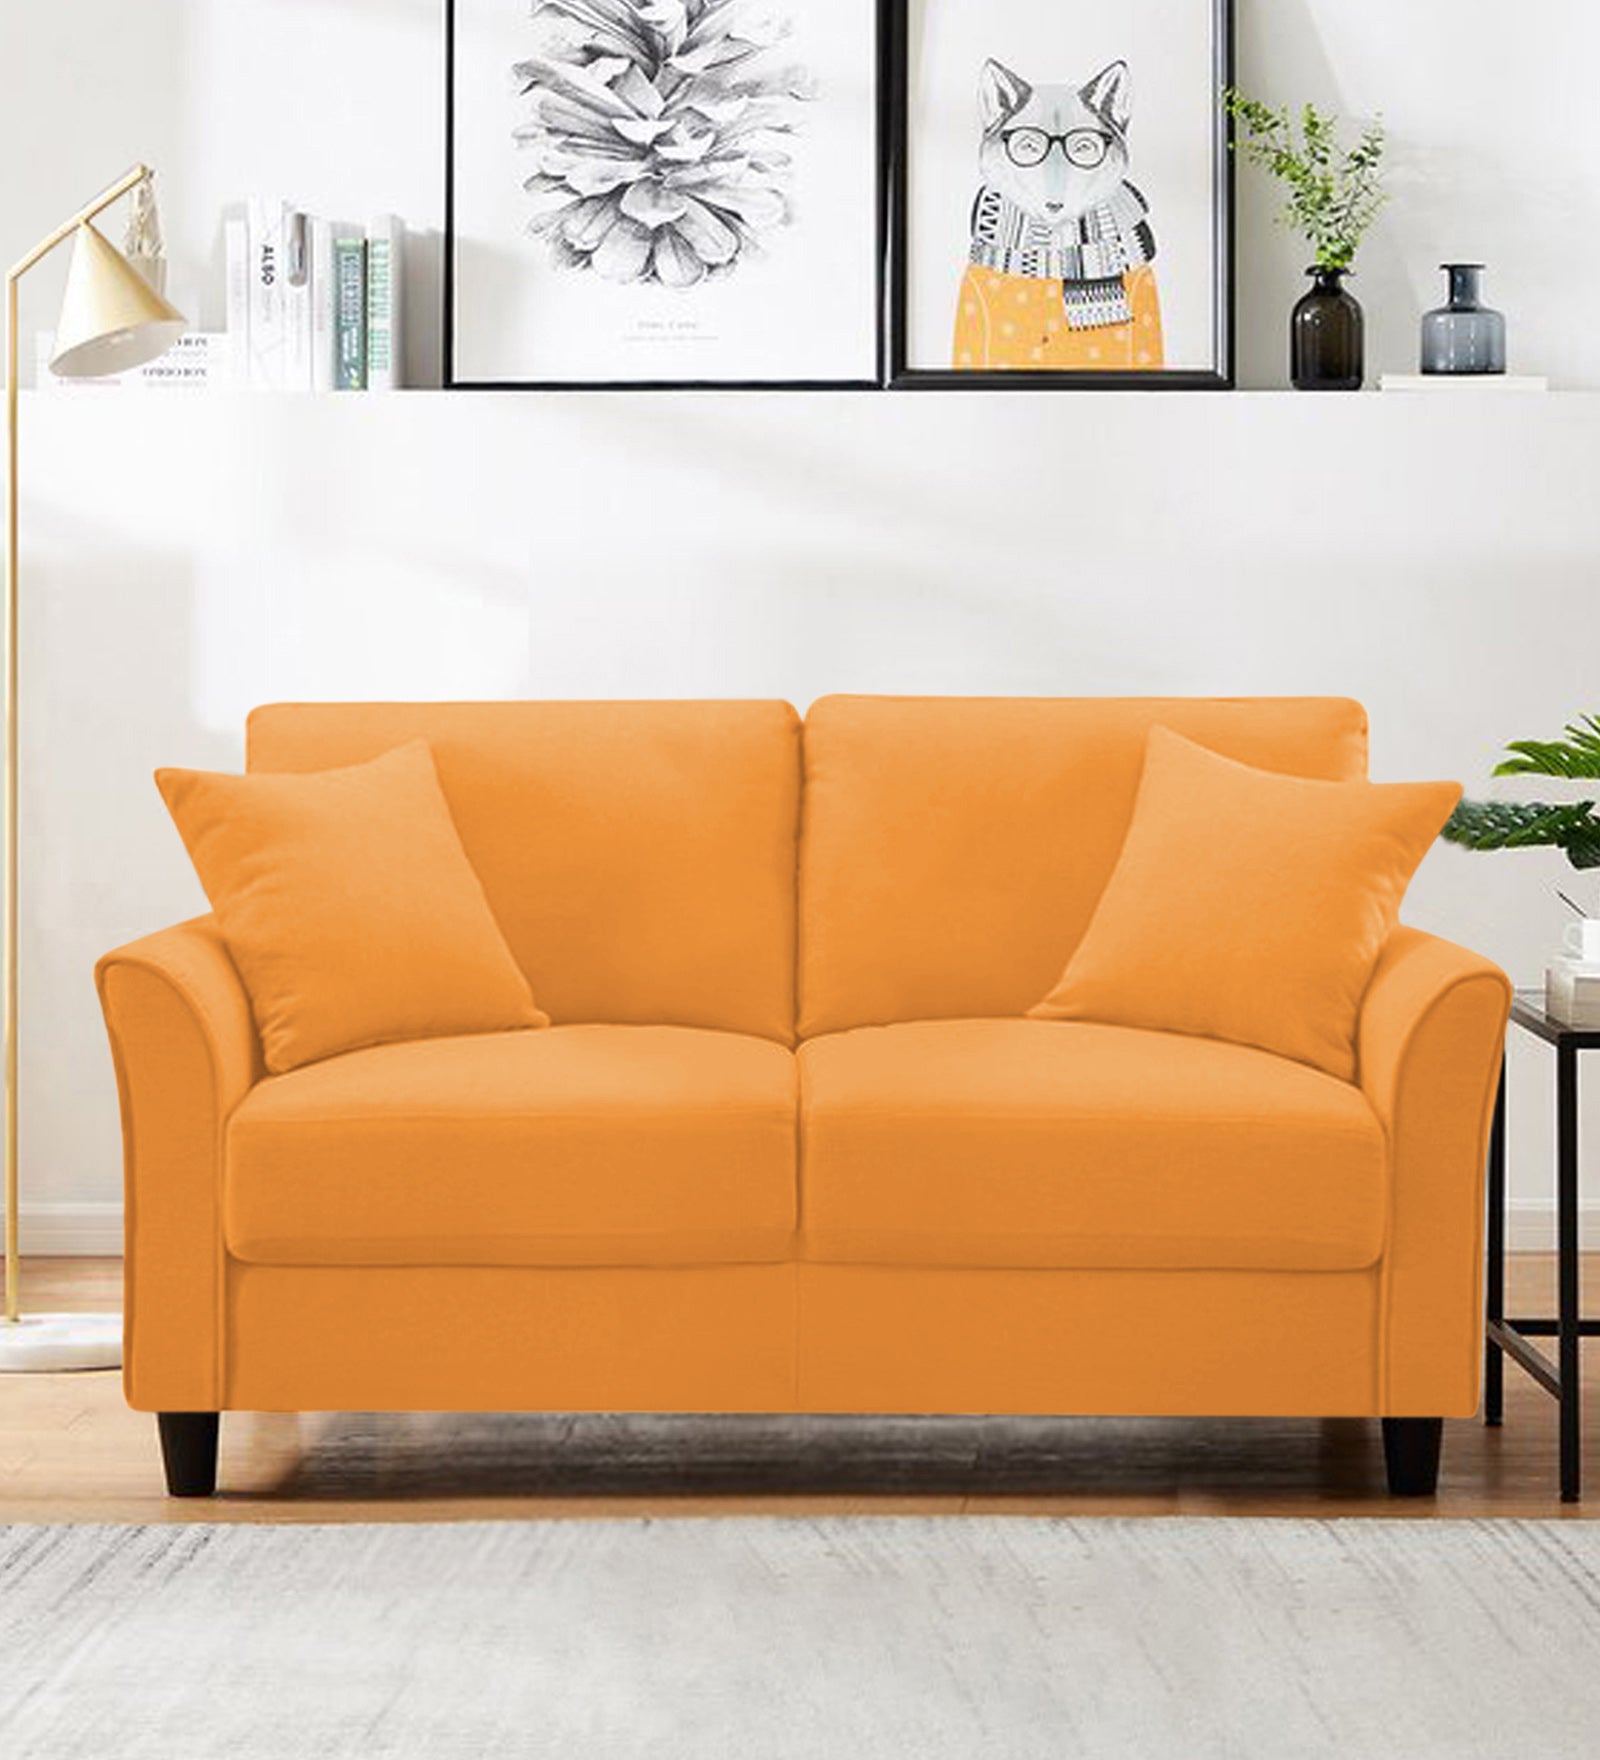 Daroo Velvet 2 Seater Sofa In Tangerine Orange Colour